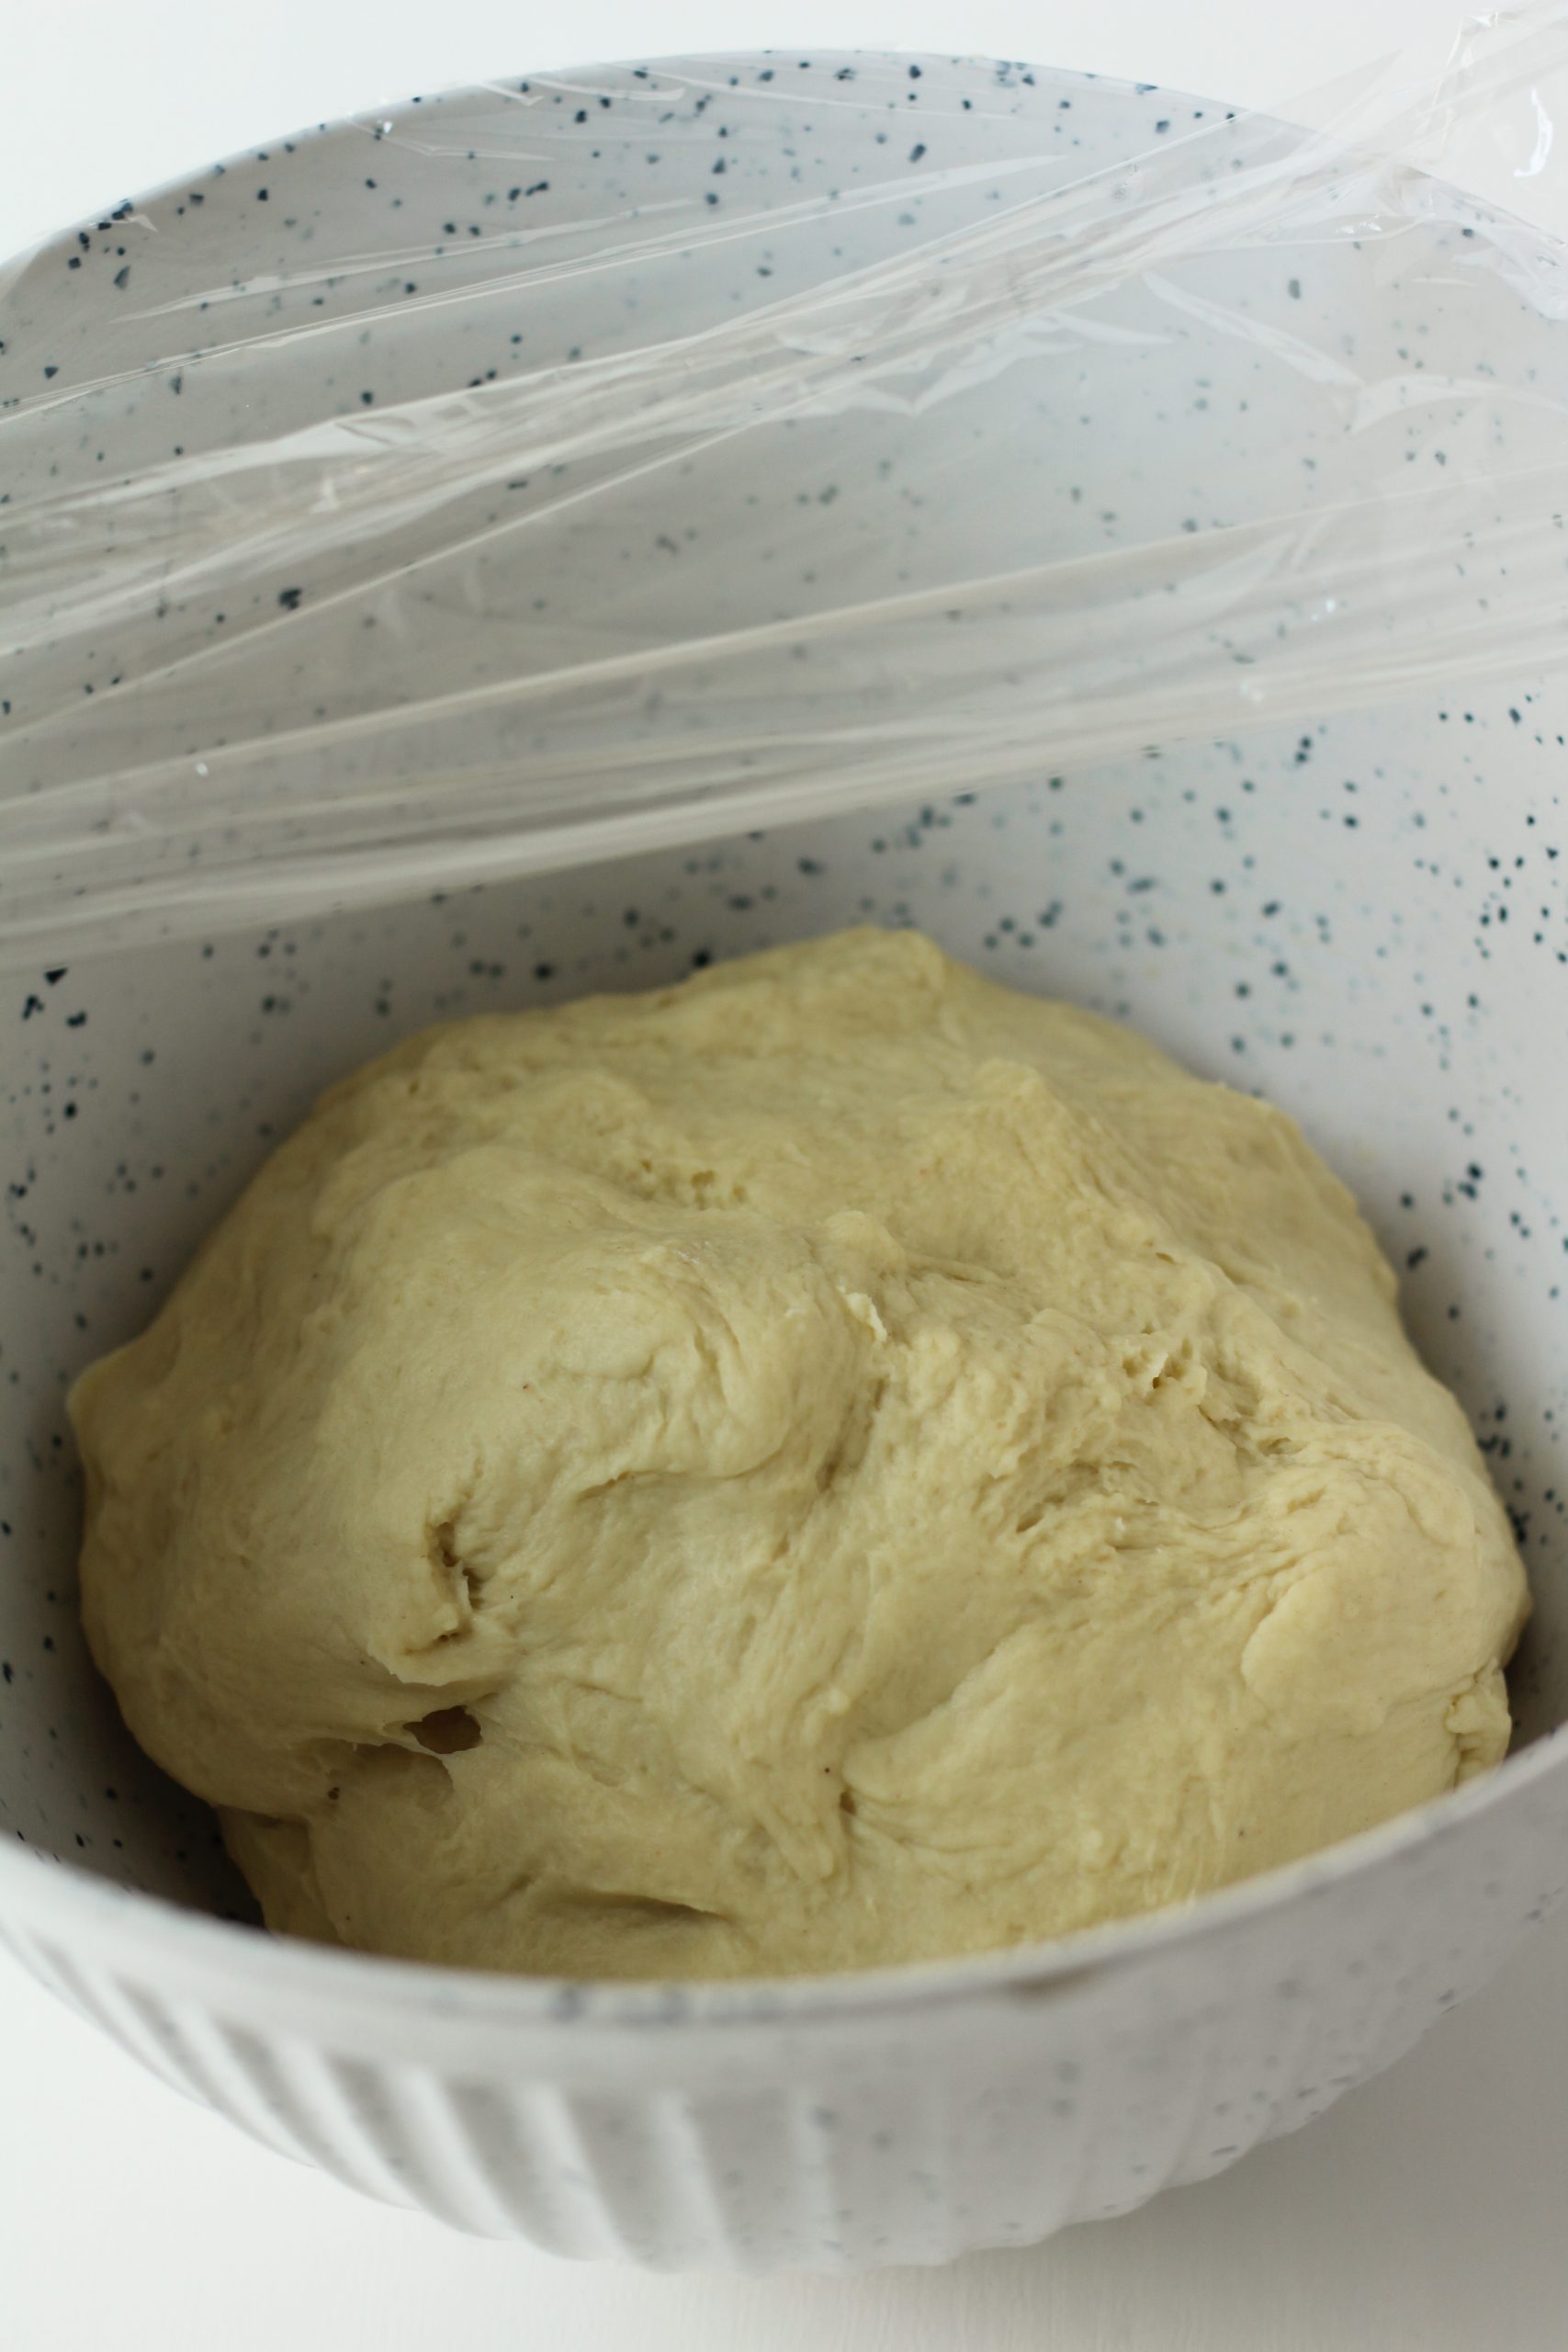 Focaccia dough before first rise